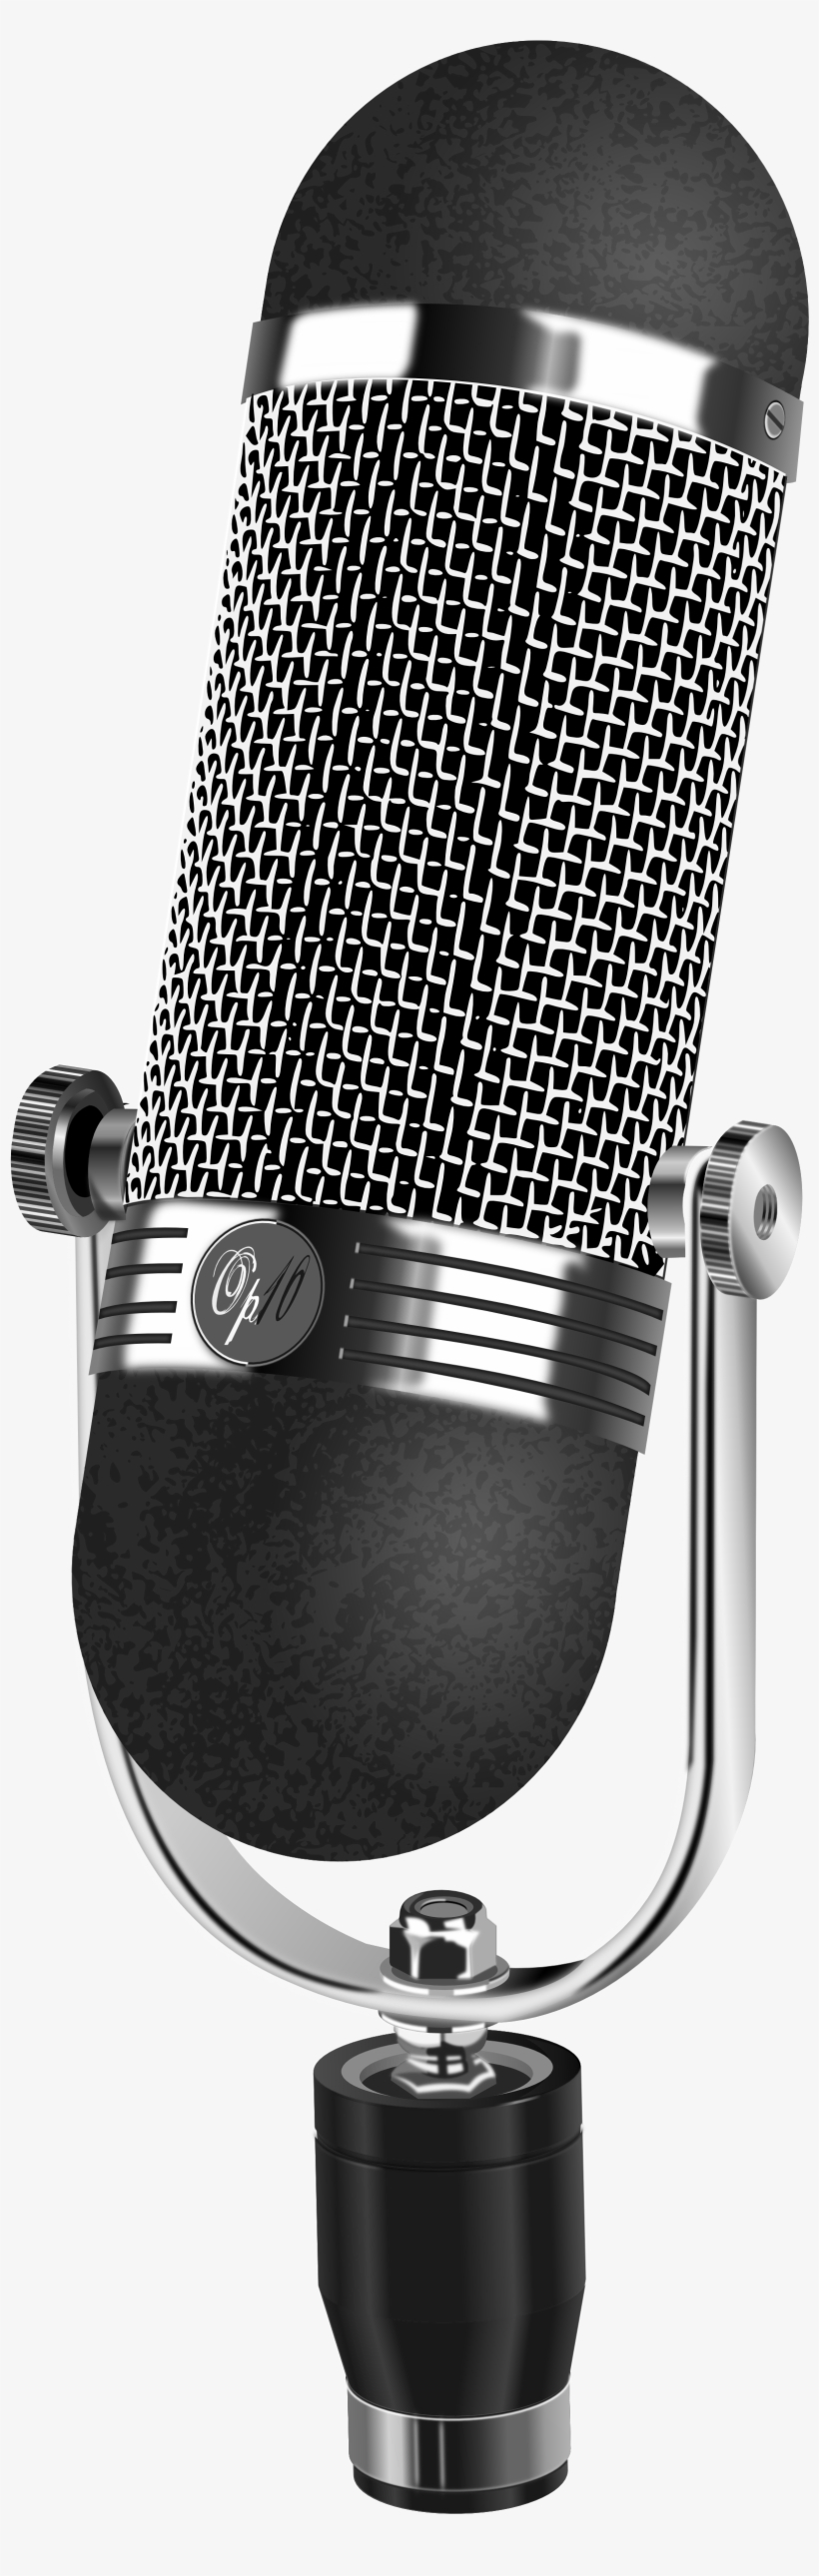 Vintage Microphone Art Png Download - Imagenes Png De Microfono, transparent png #600703